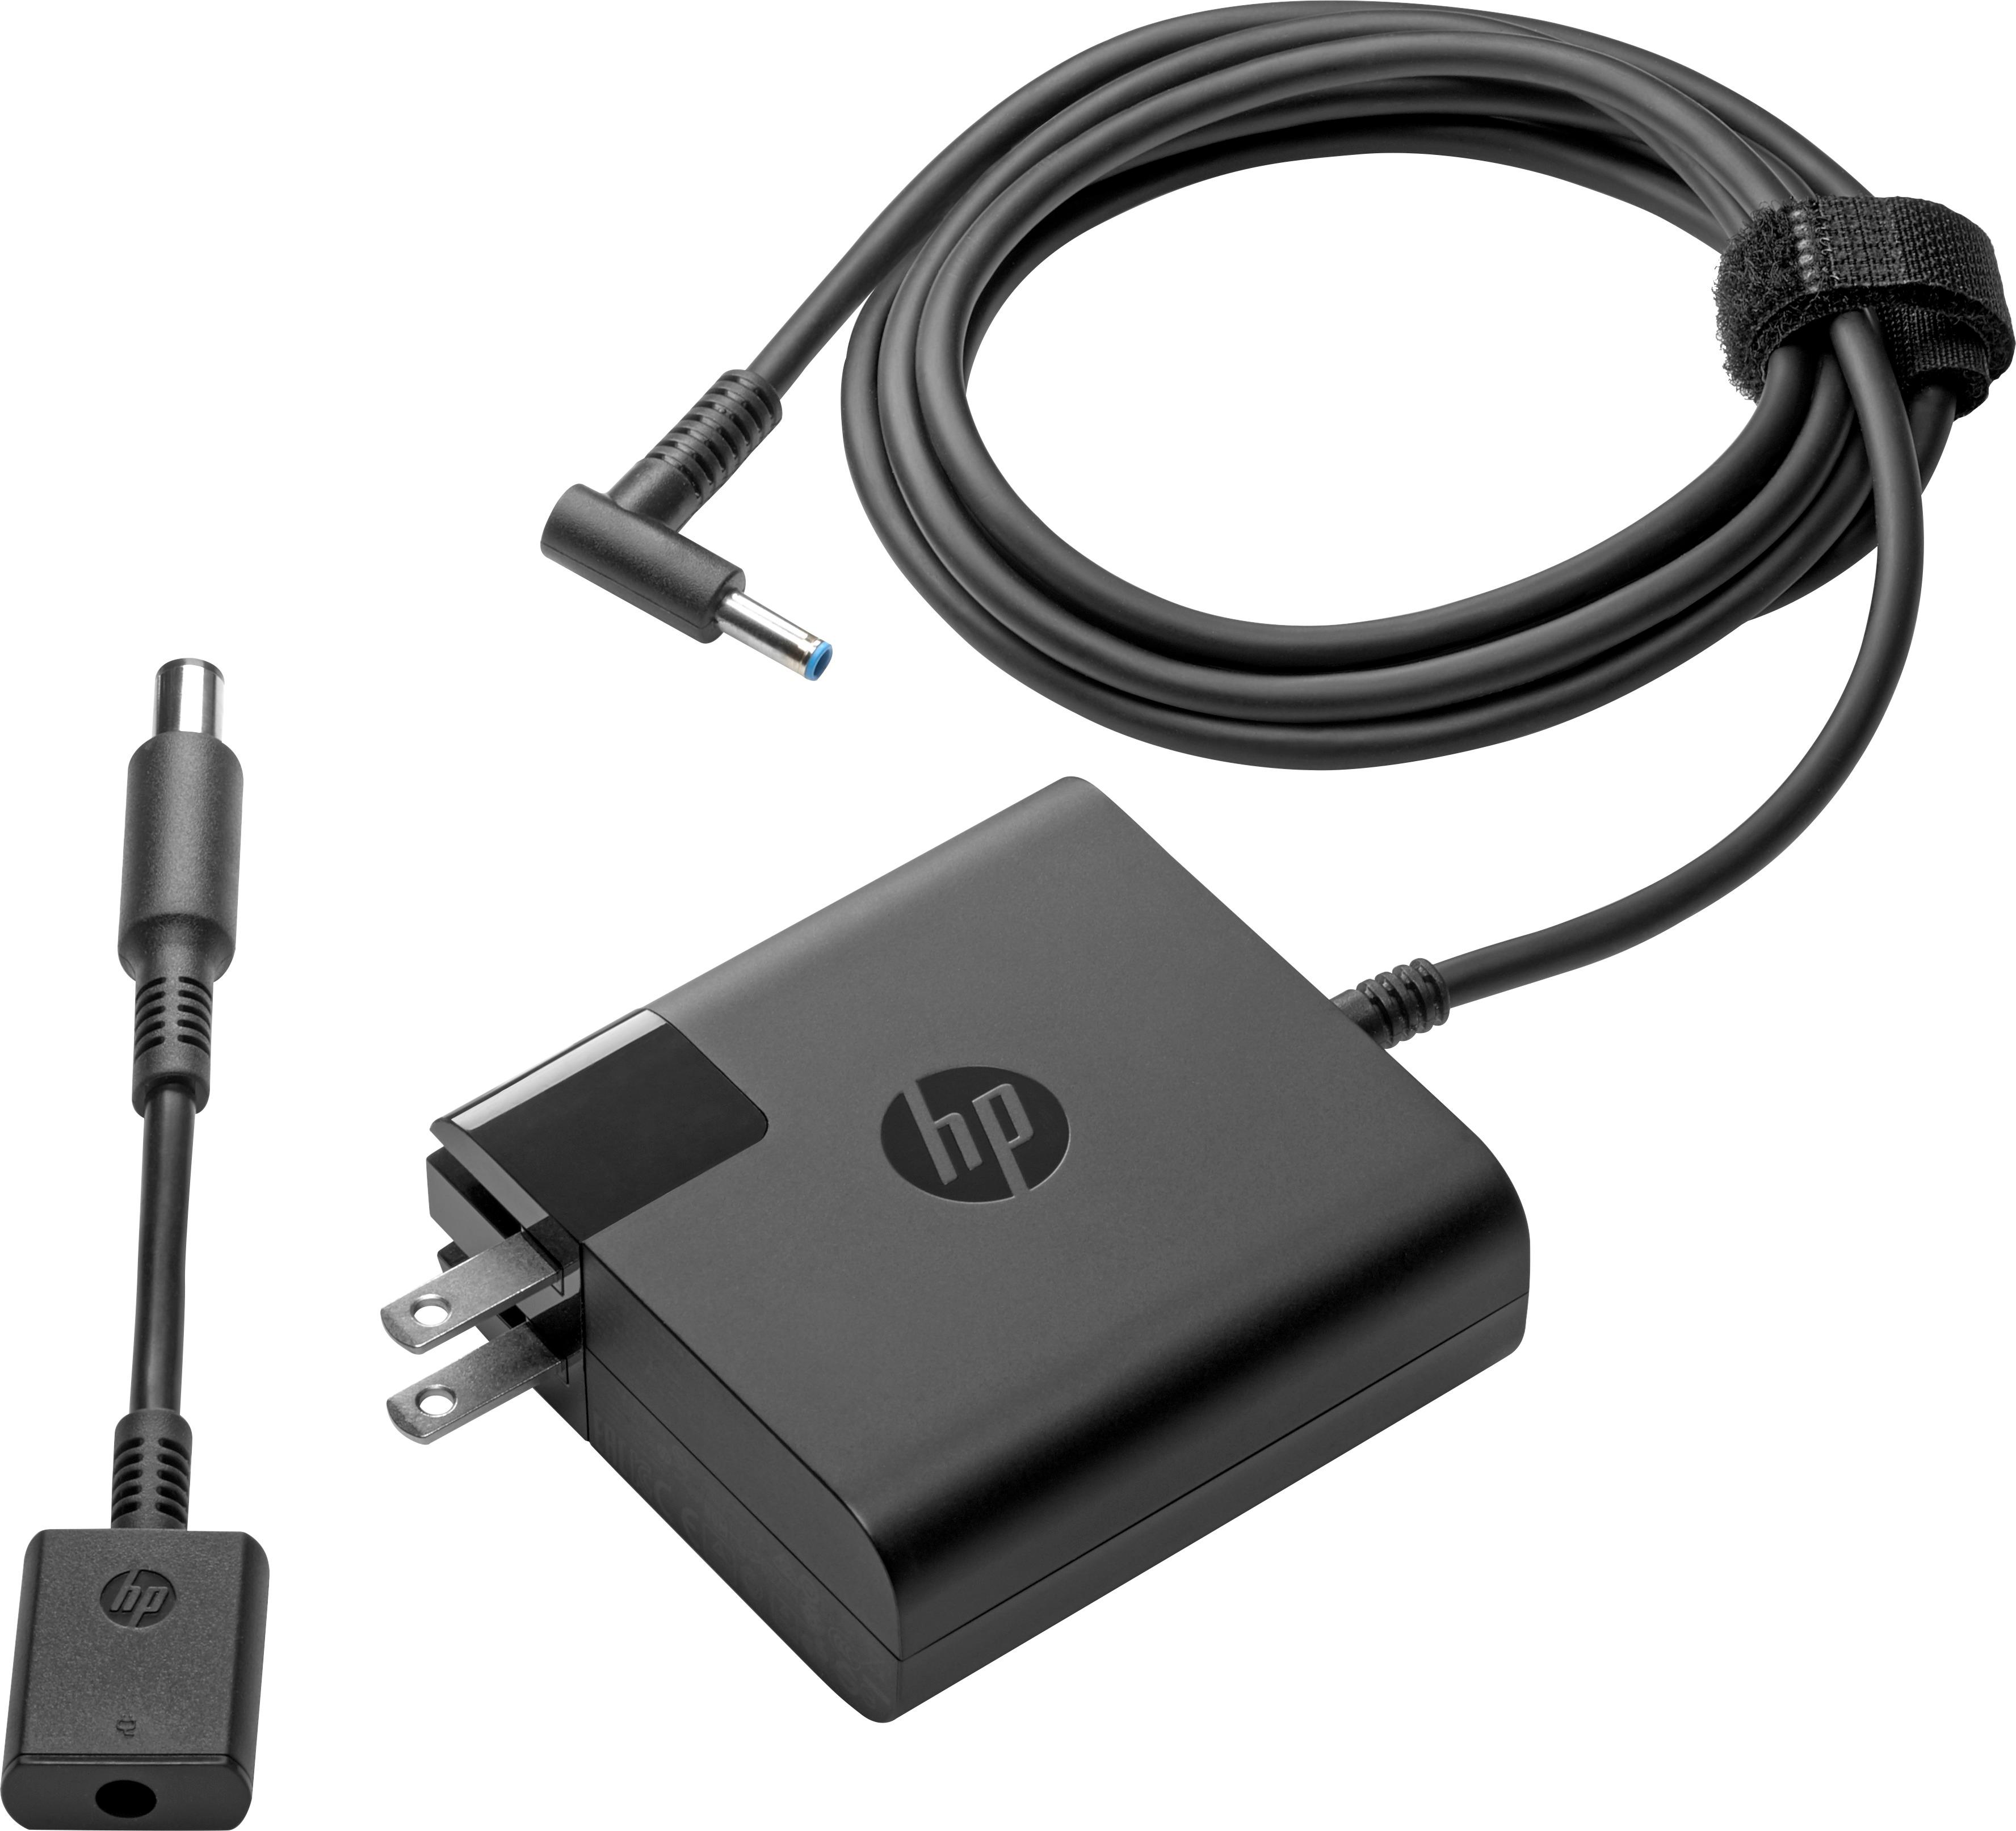 HP Universal Power Adapter Black 1MY05AA#ABA - Best Buy